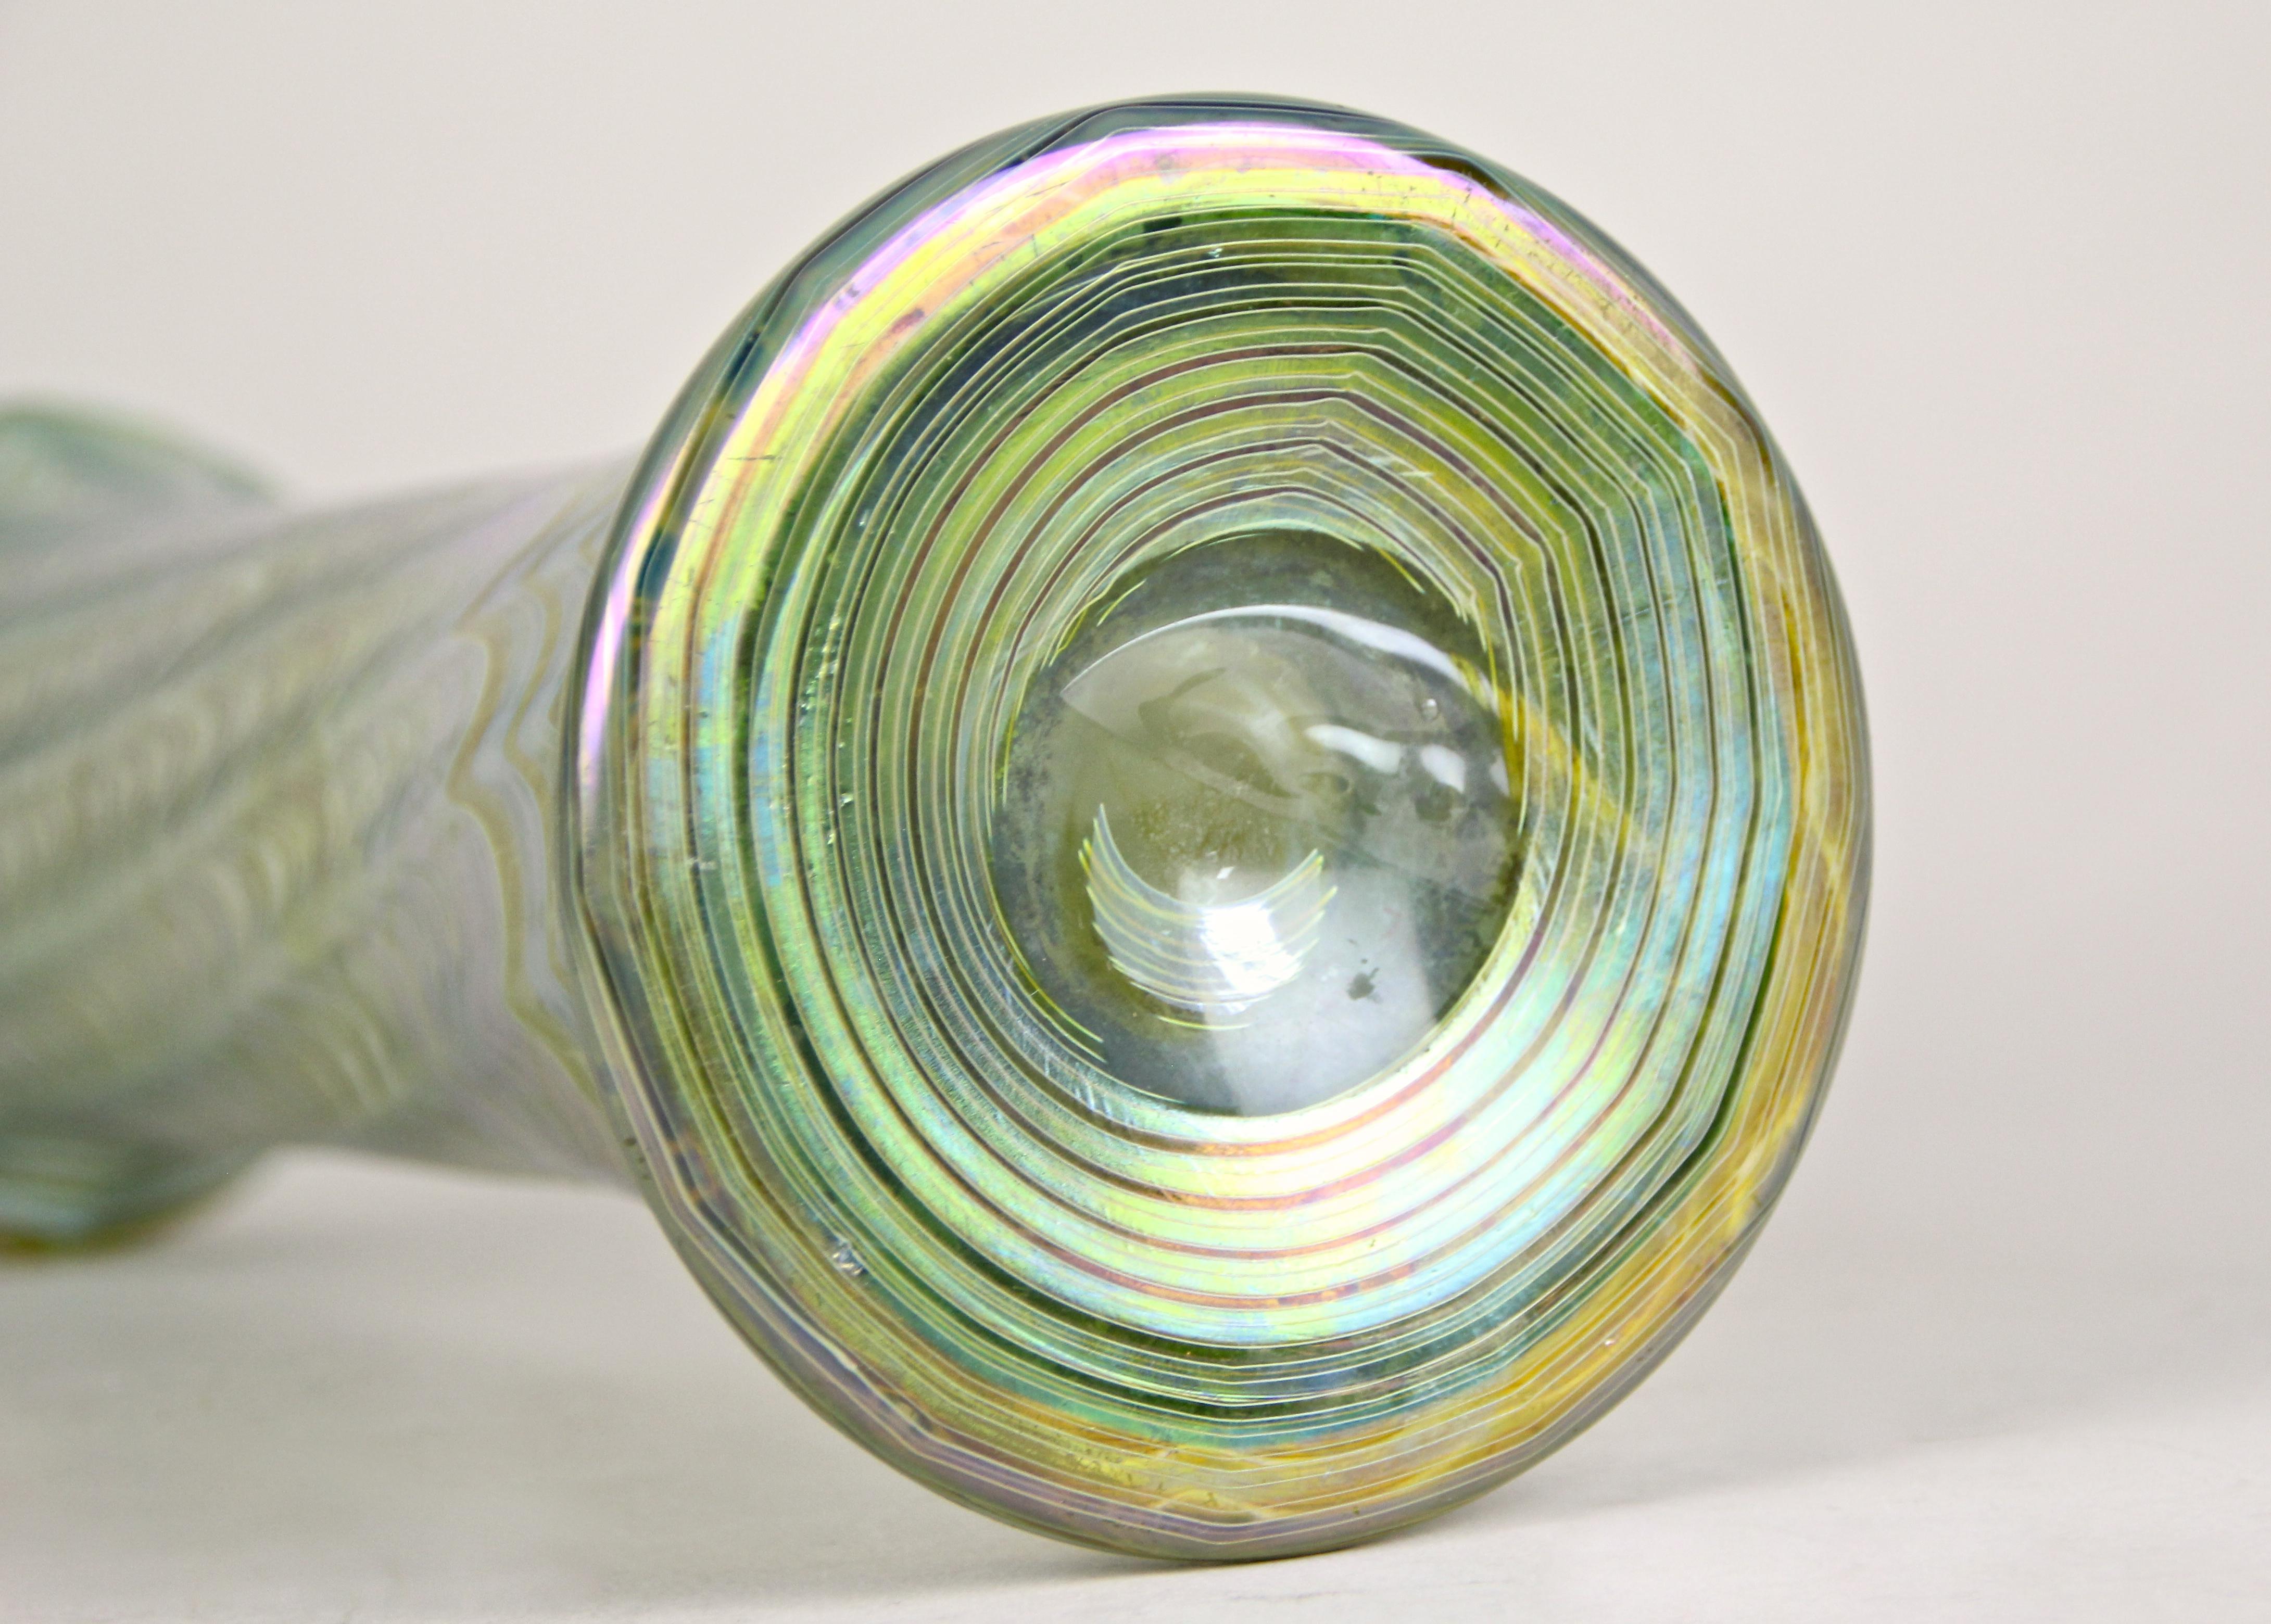 Loetz Witwe Glass Vase Phaenomen Genre 6893 Green, Bohemia, circa 1899 For Sale 2